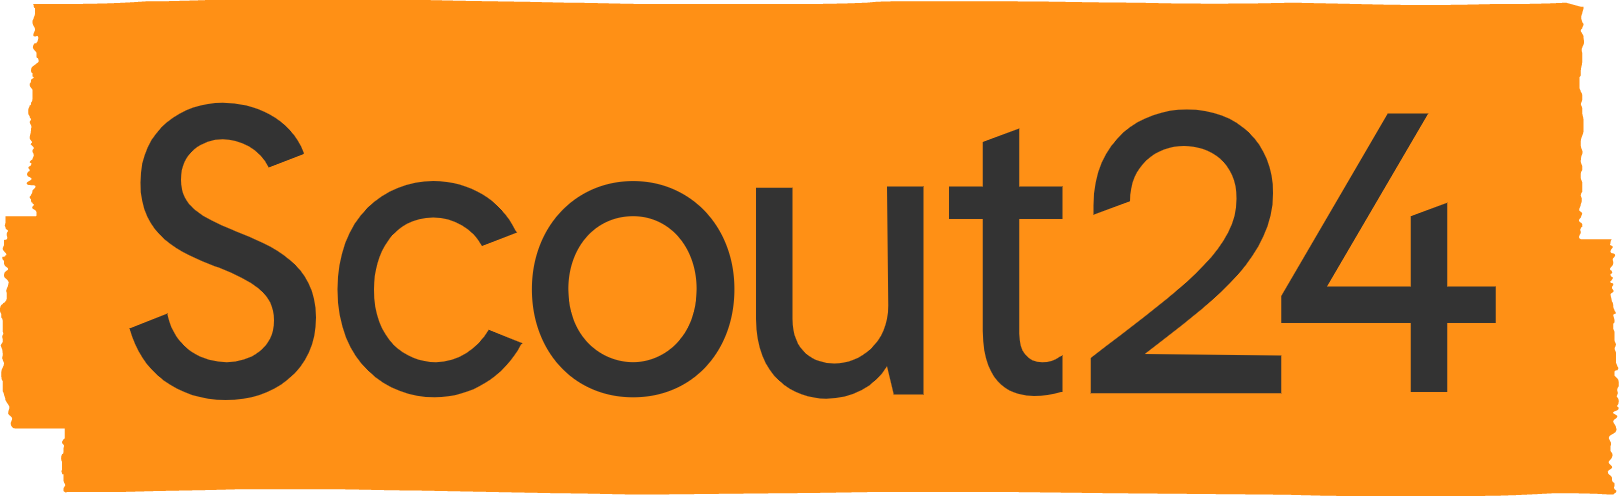 Scout24 logo (PNG transparent)